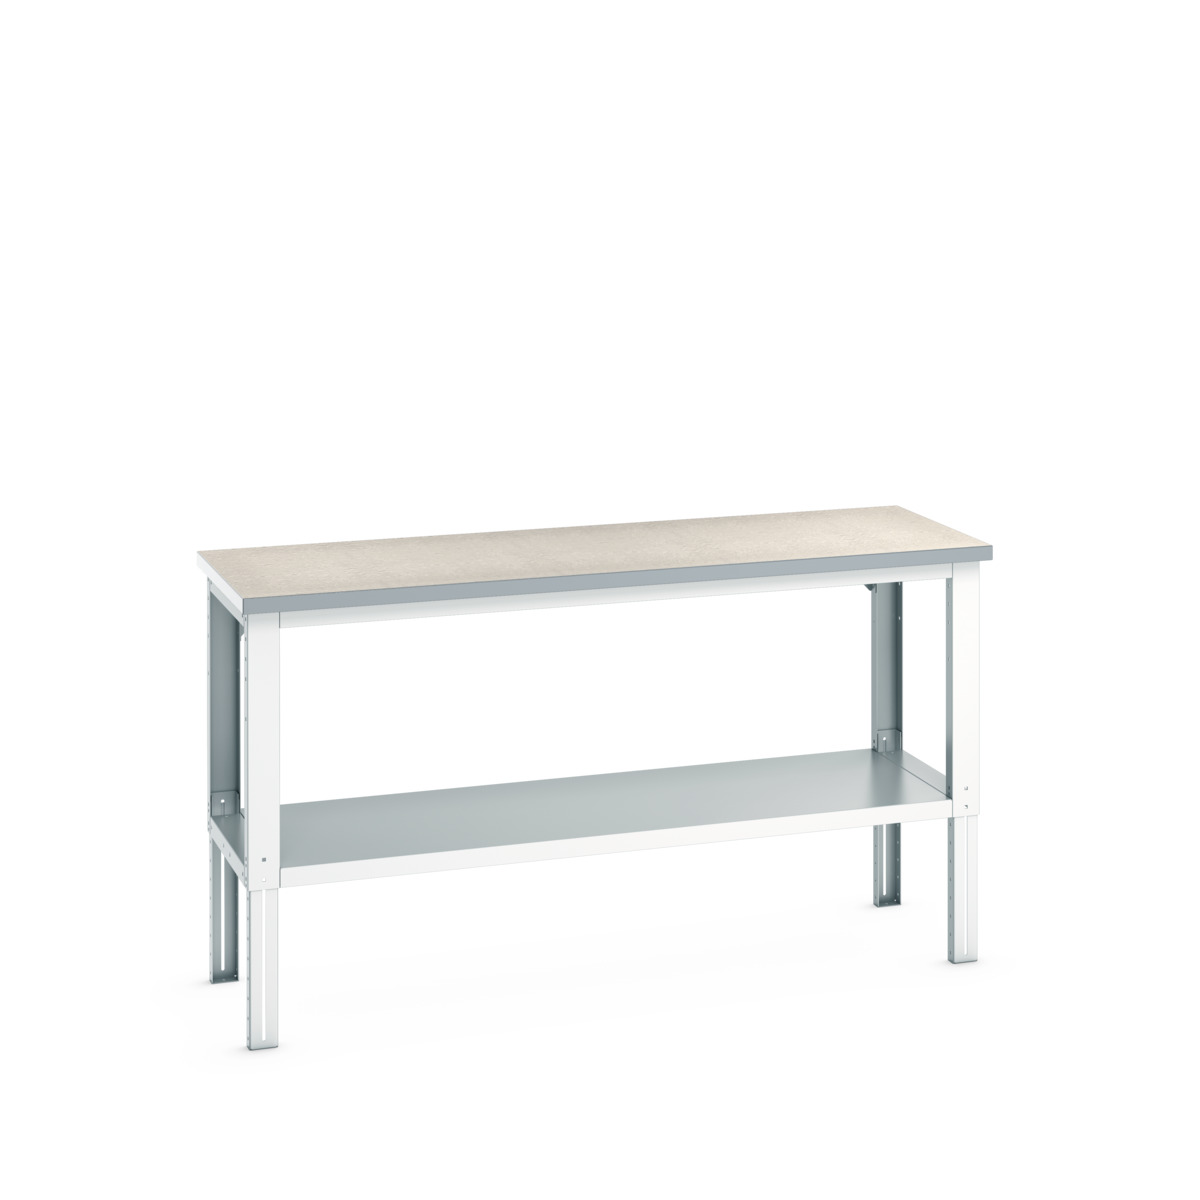 41003510.16V - cubio framework bench adj height (lino)